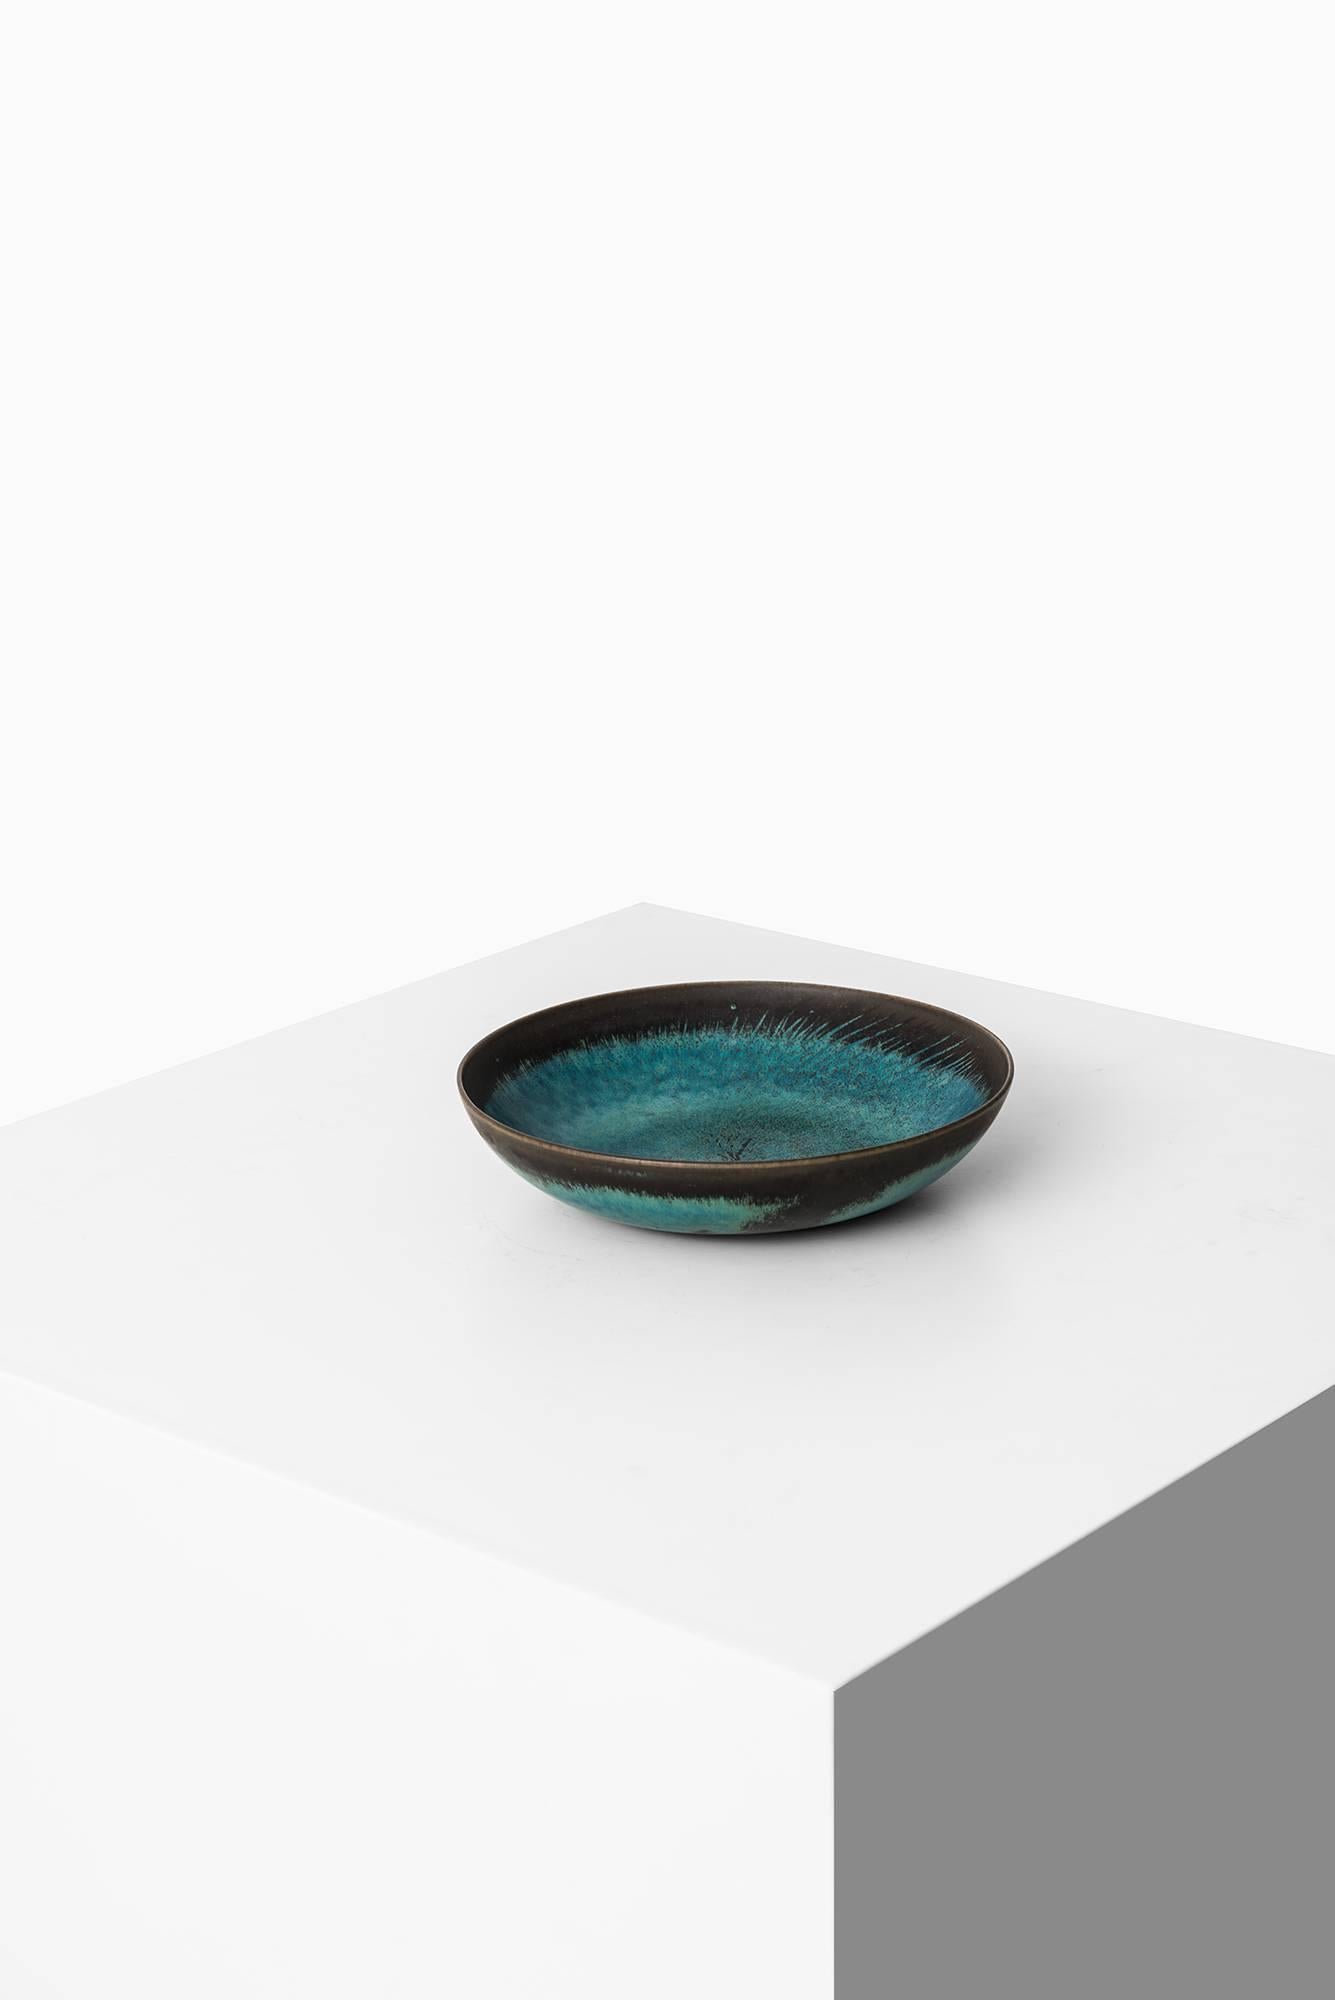 Rare ceramic bowl designed by Stig Lindberg. Produced by Gustavsberg in Sweden.